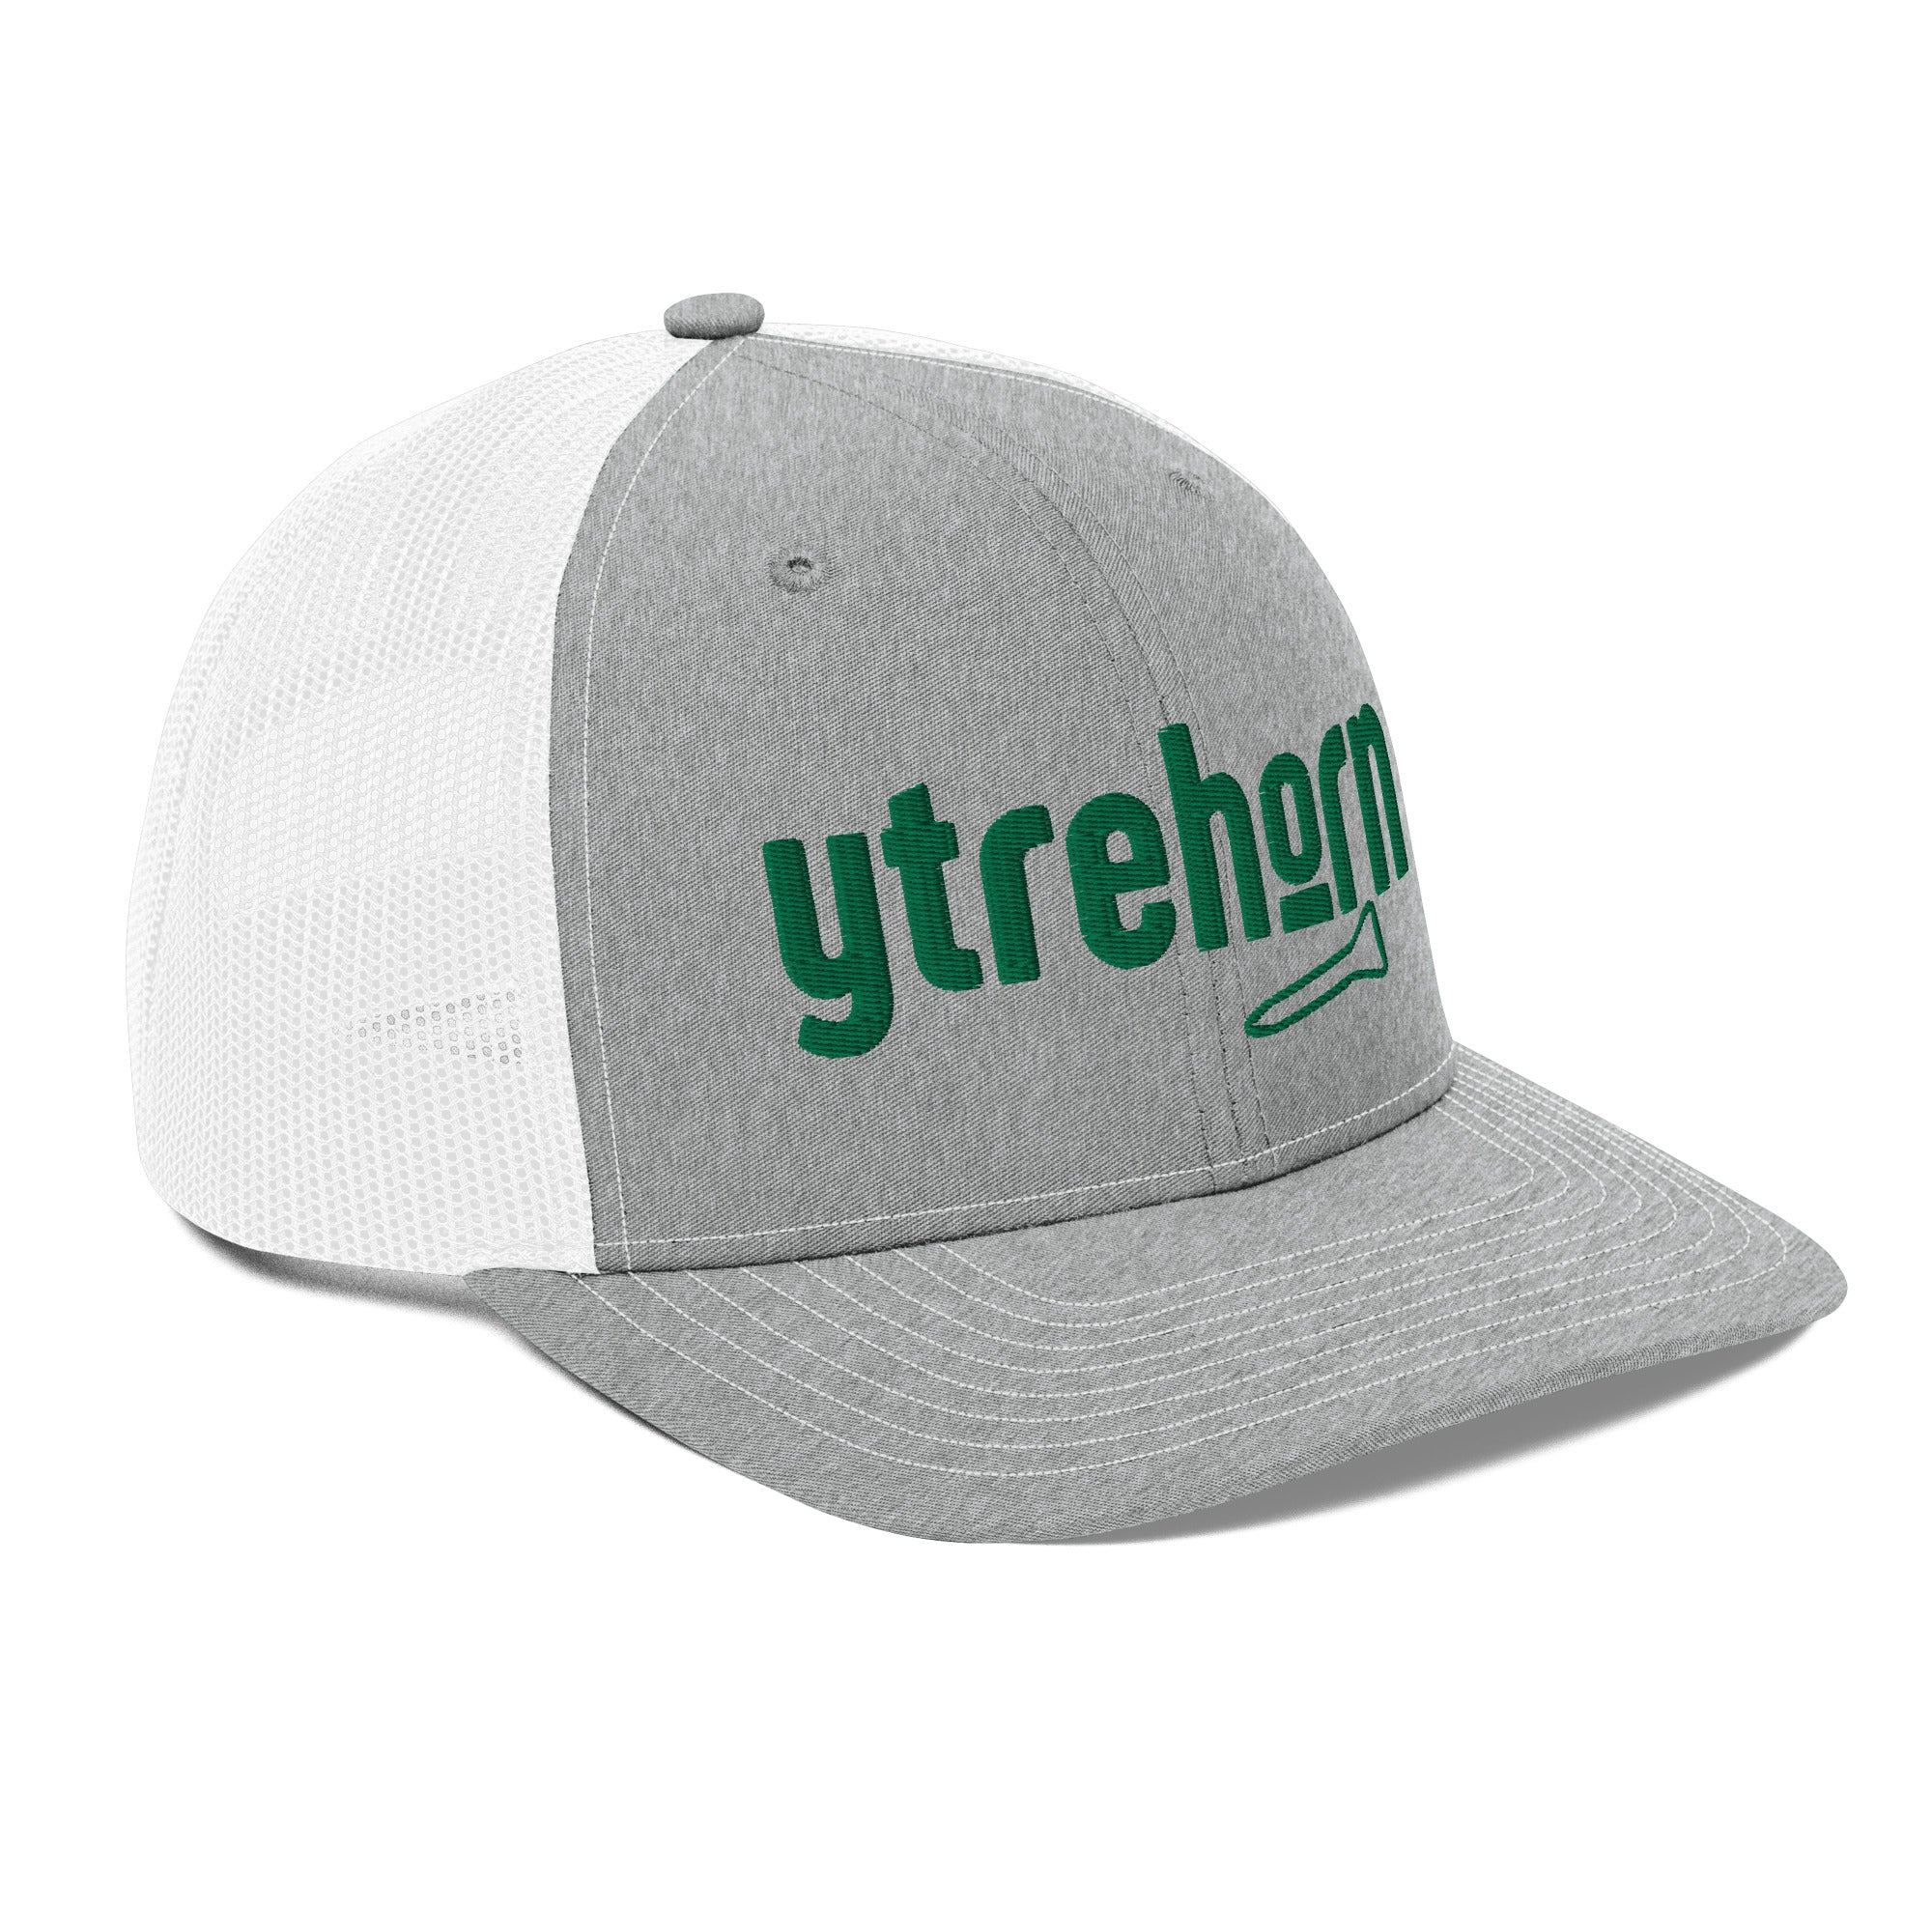 Golf Trucker Hat Green